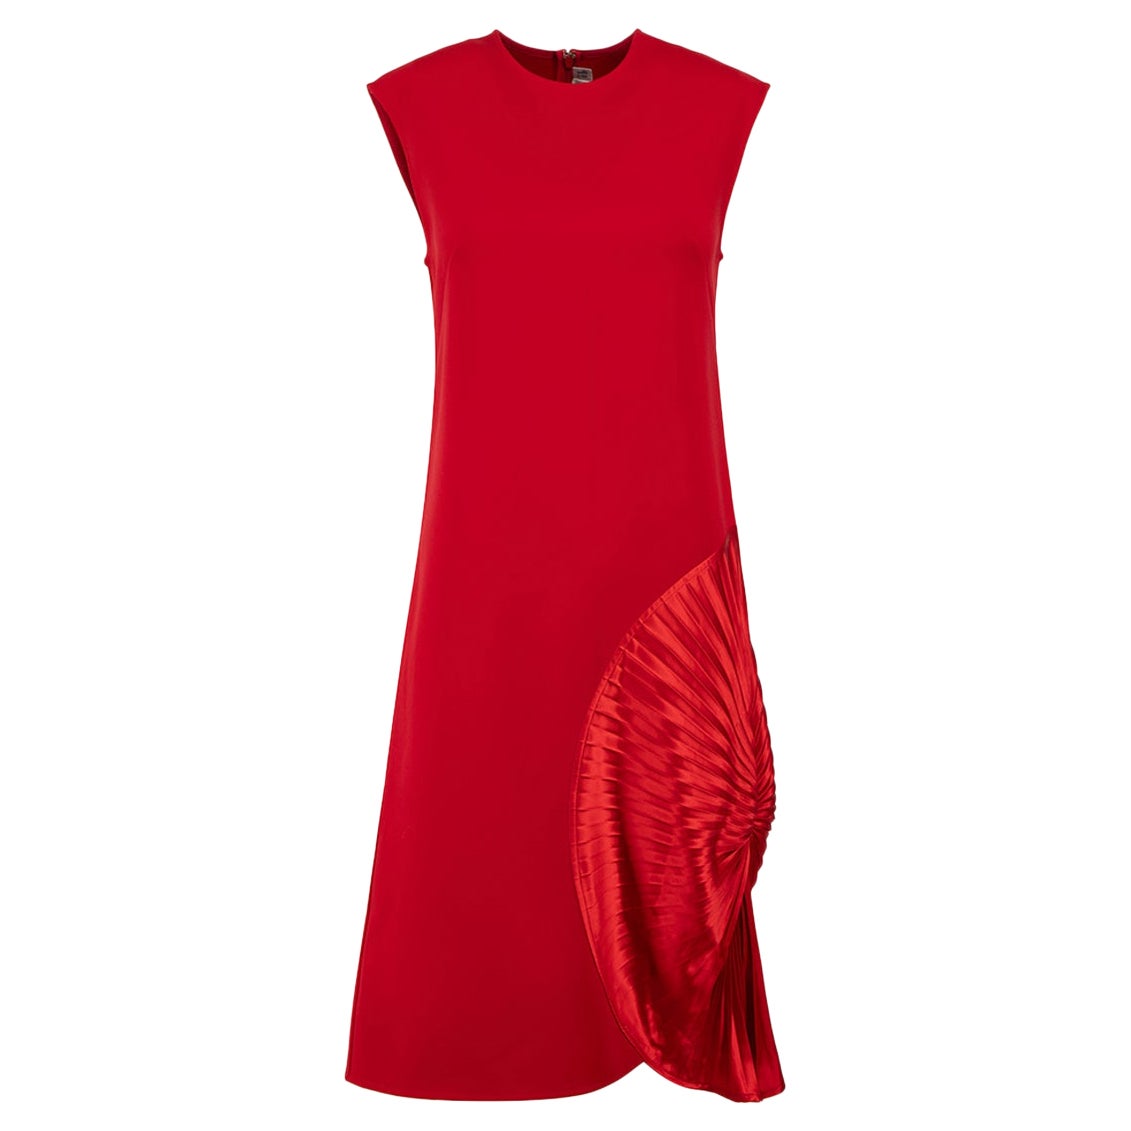 Victoria Beckham Red Pleat Panel Shift Dress Size S